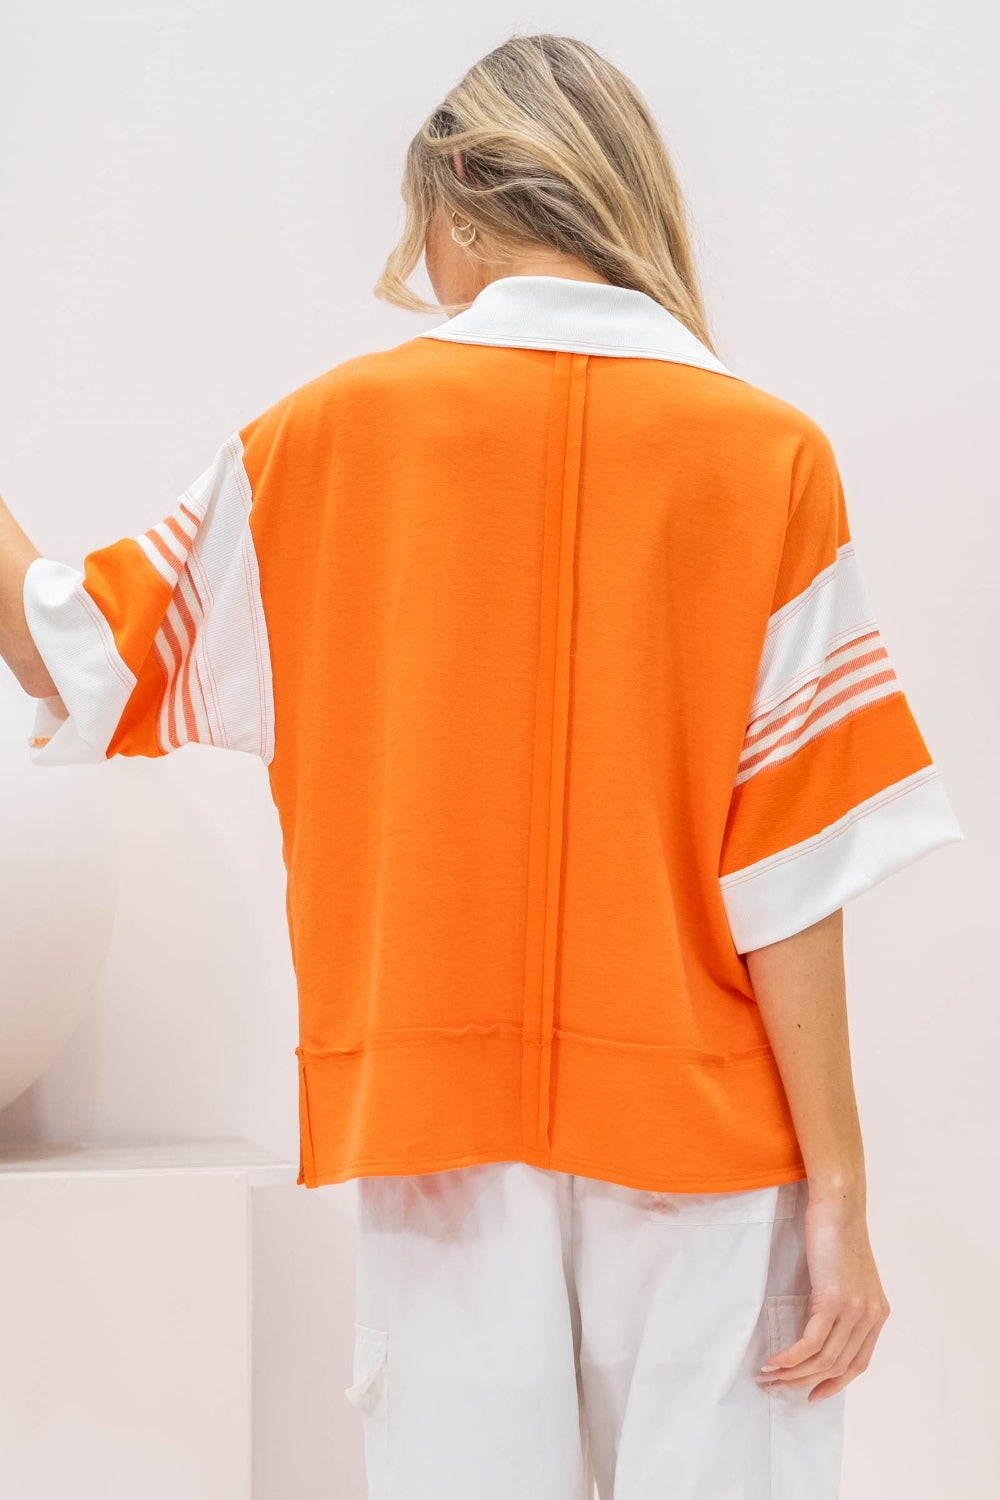 Orange pullover featuring bold white stripe accents